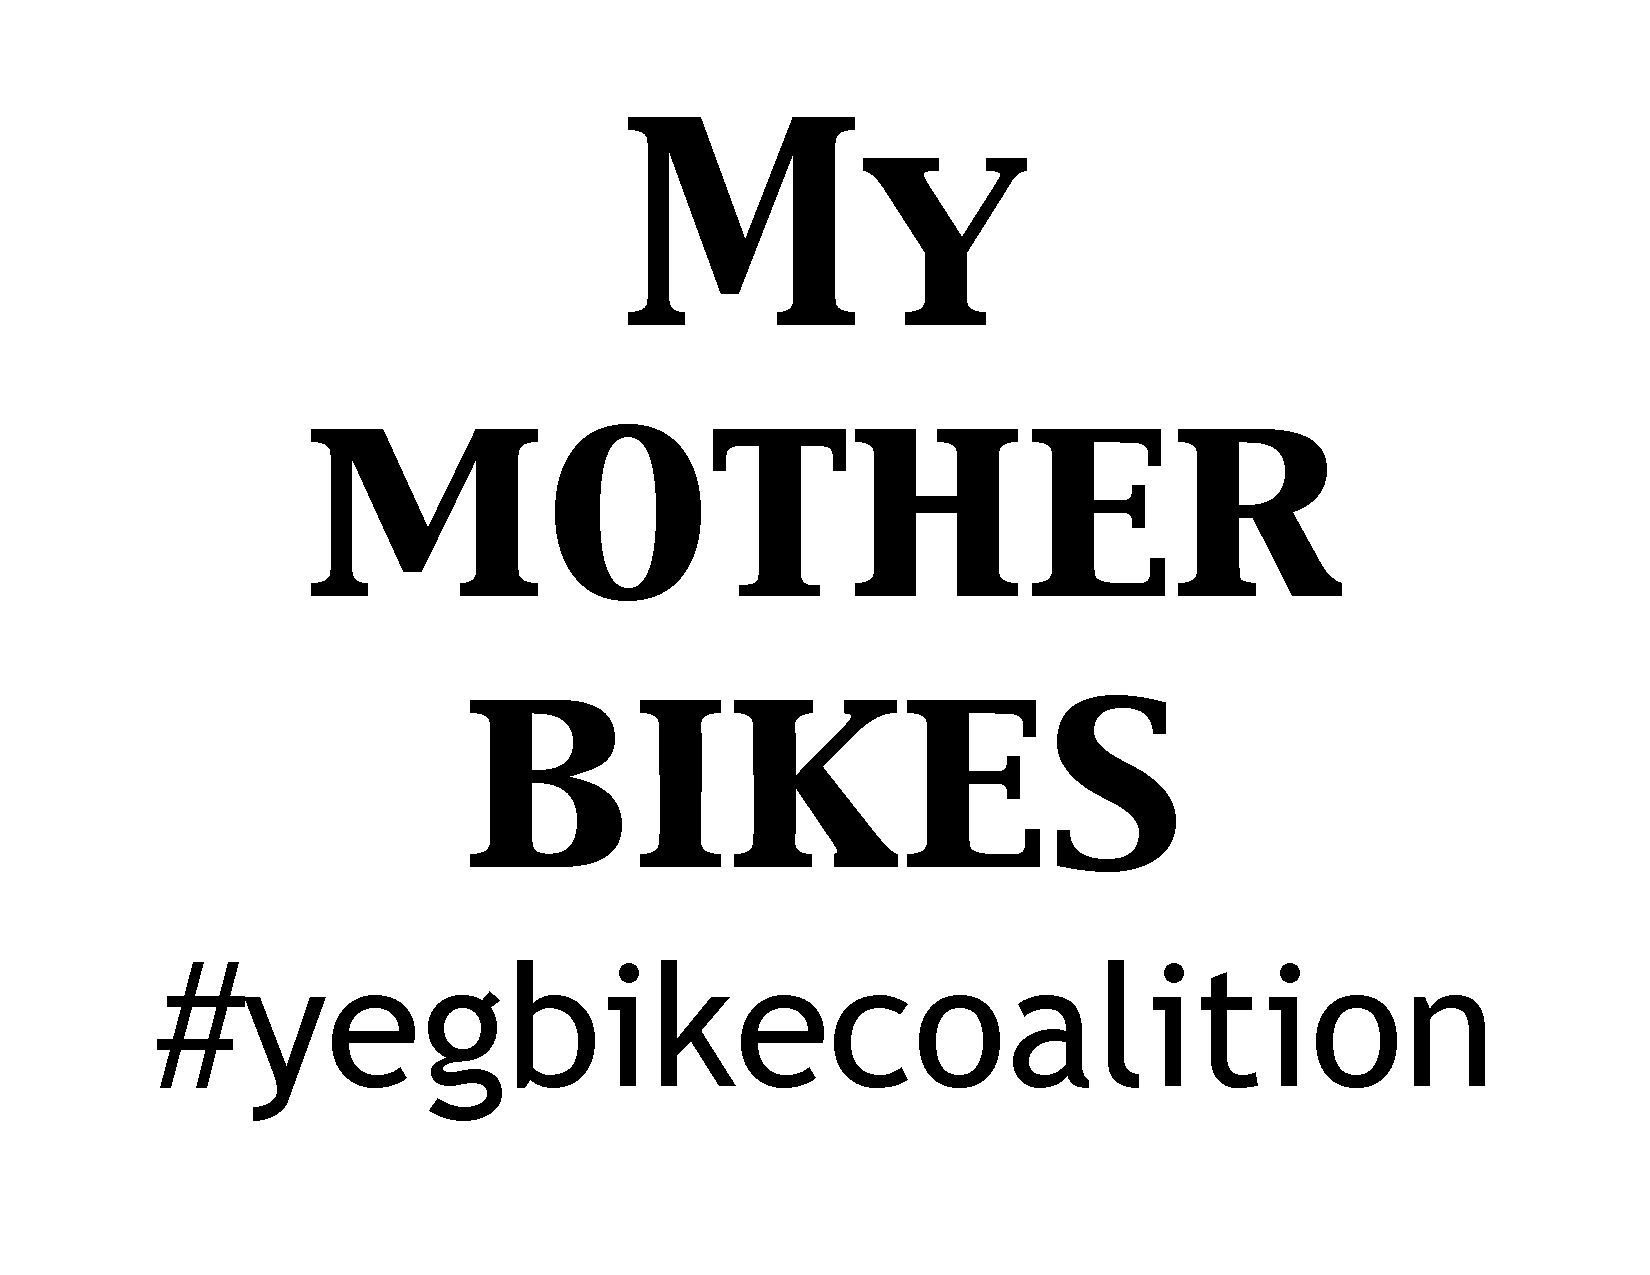 My mother bikes